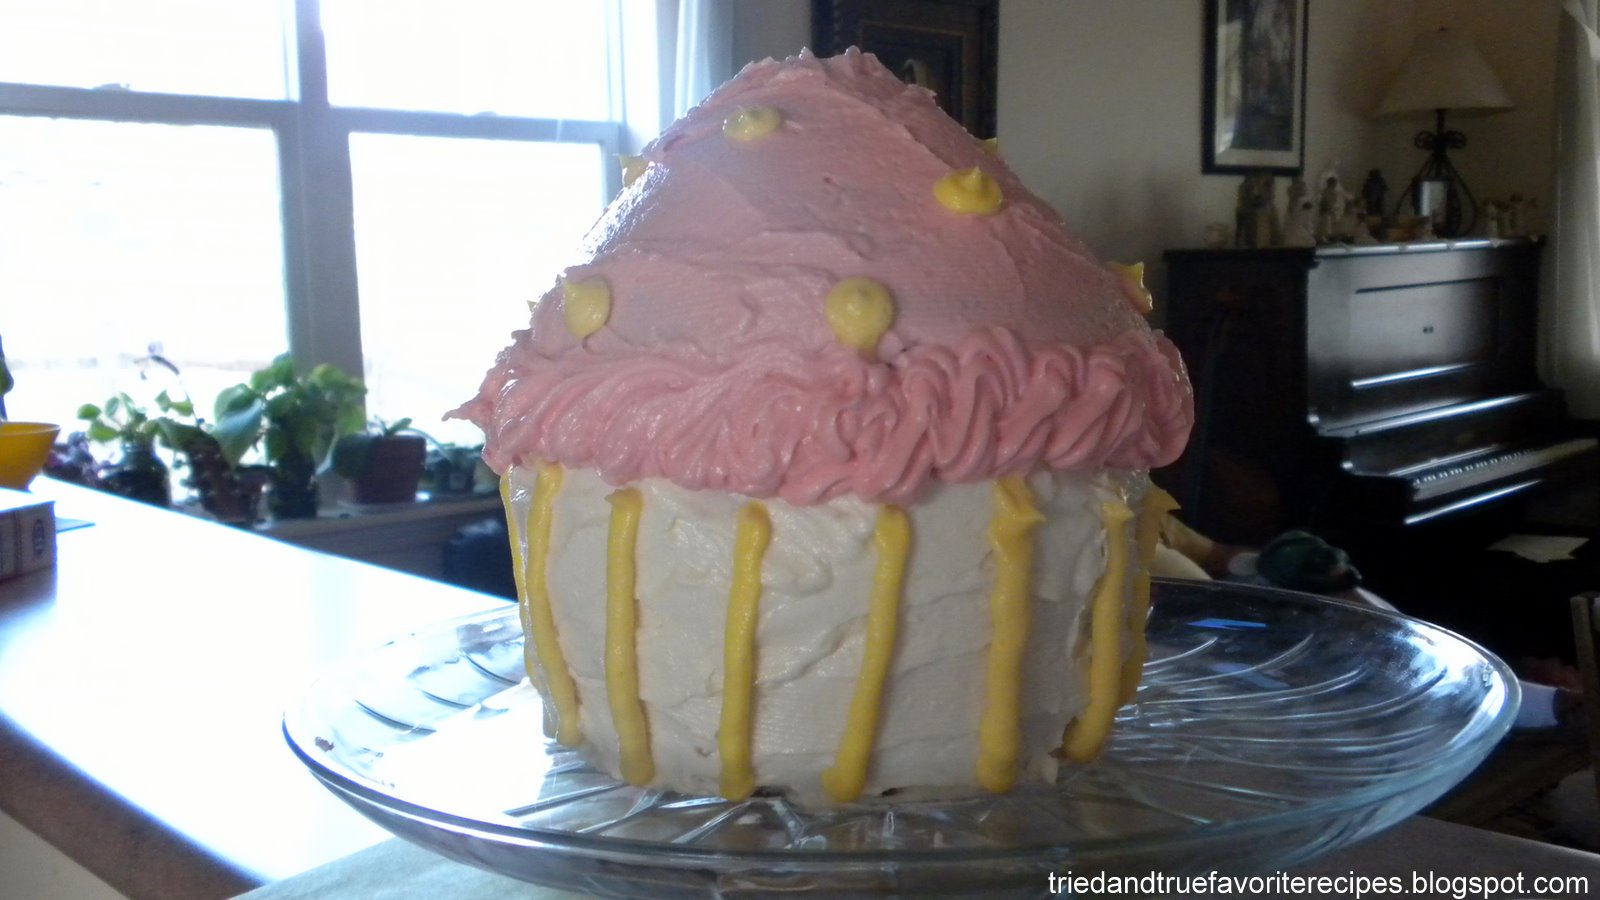 Tried and True Favorite Recipes: Big Top - Giant Cupcake Cake & Tips